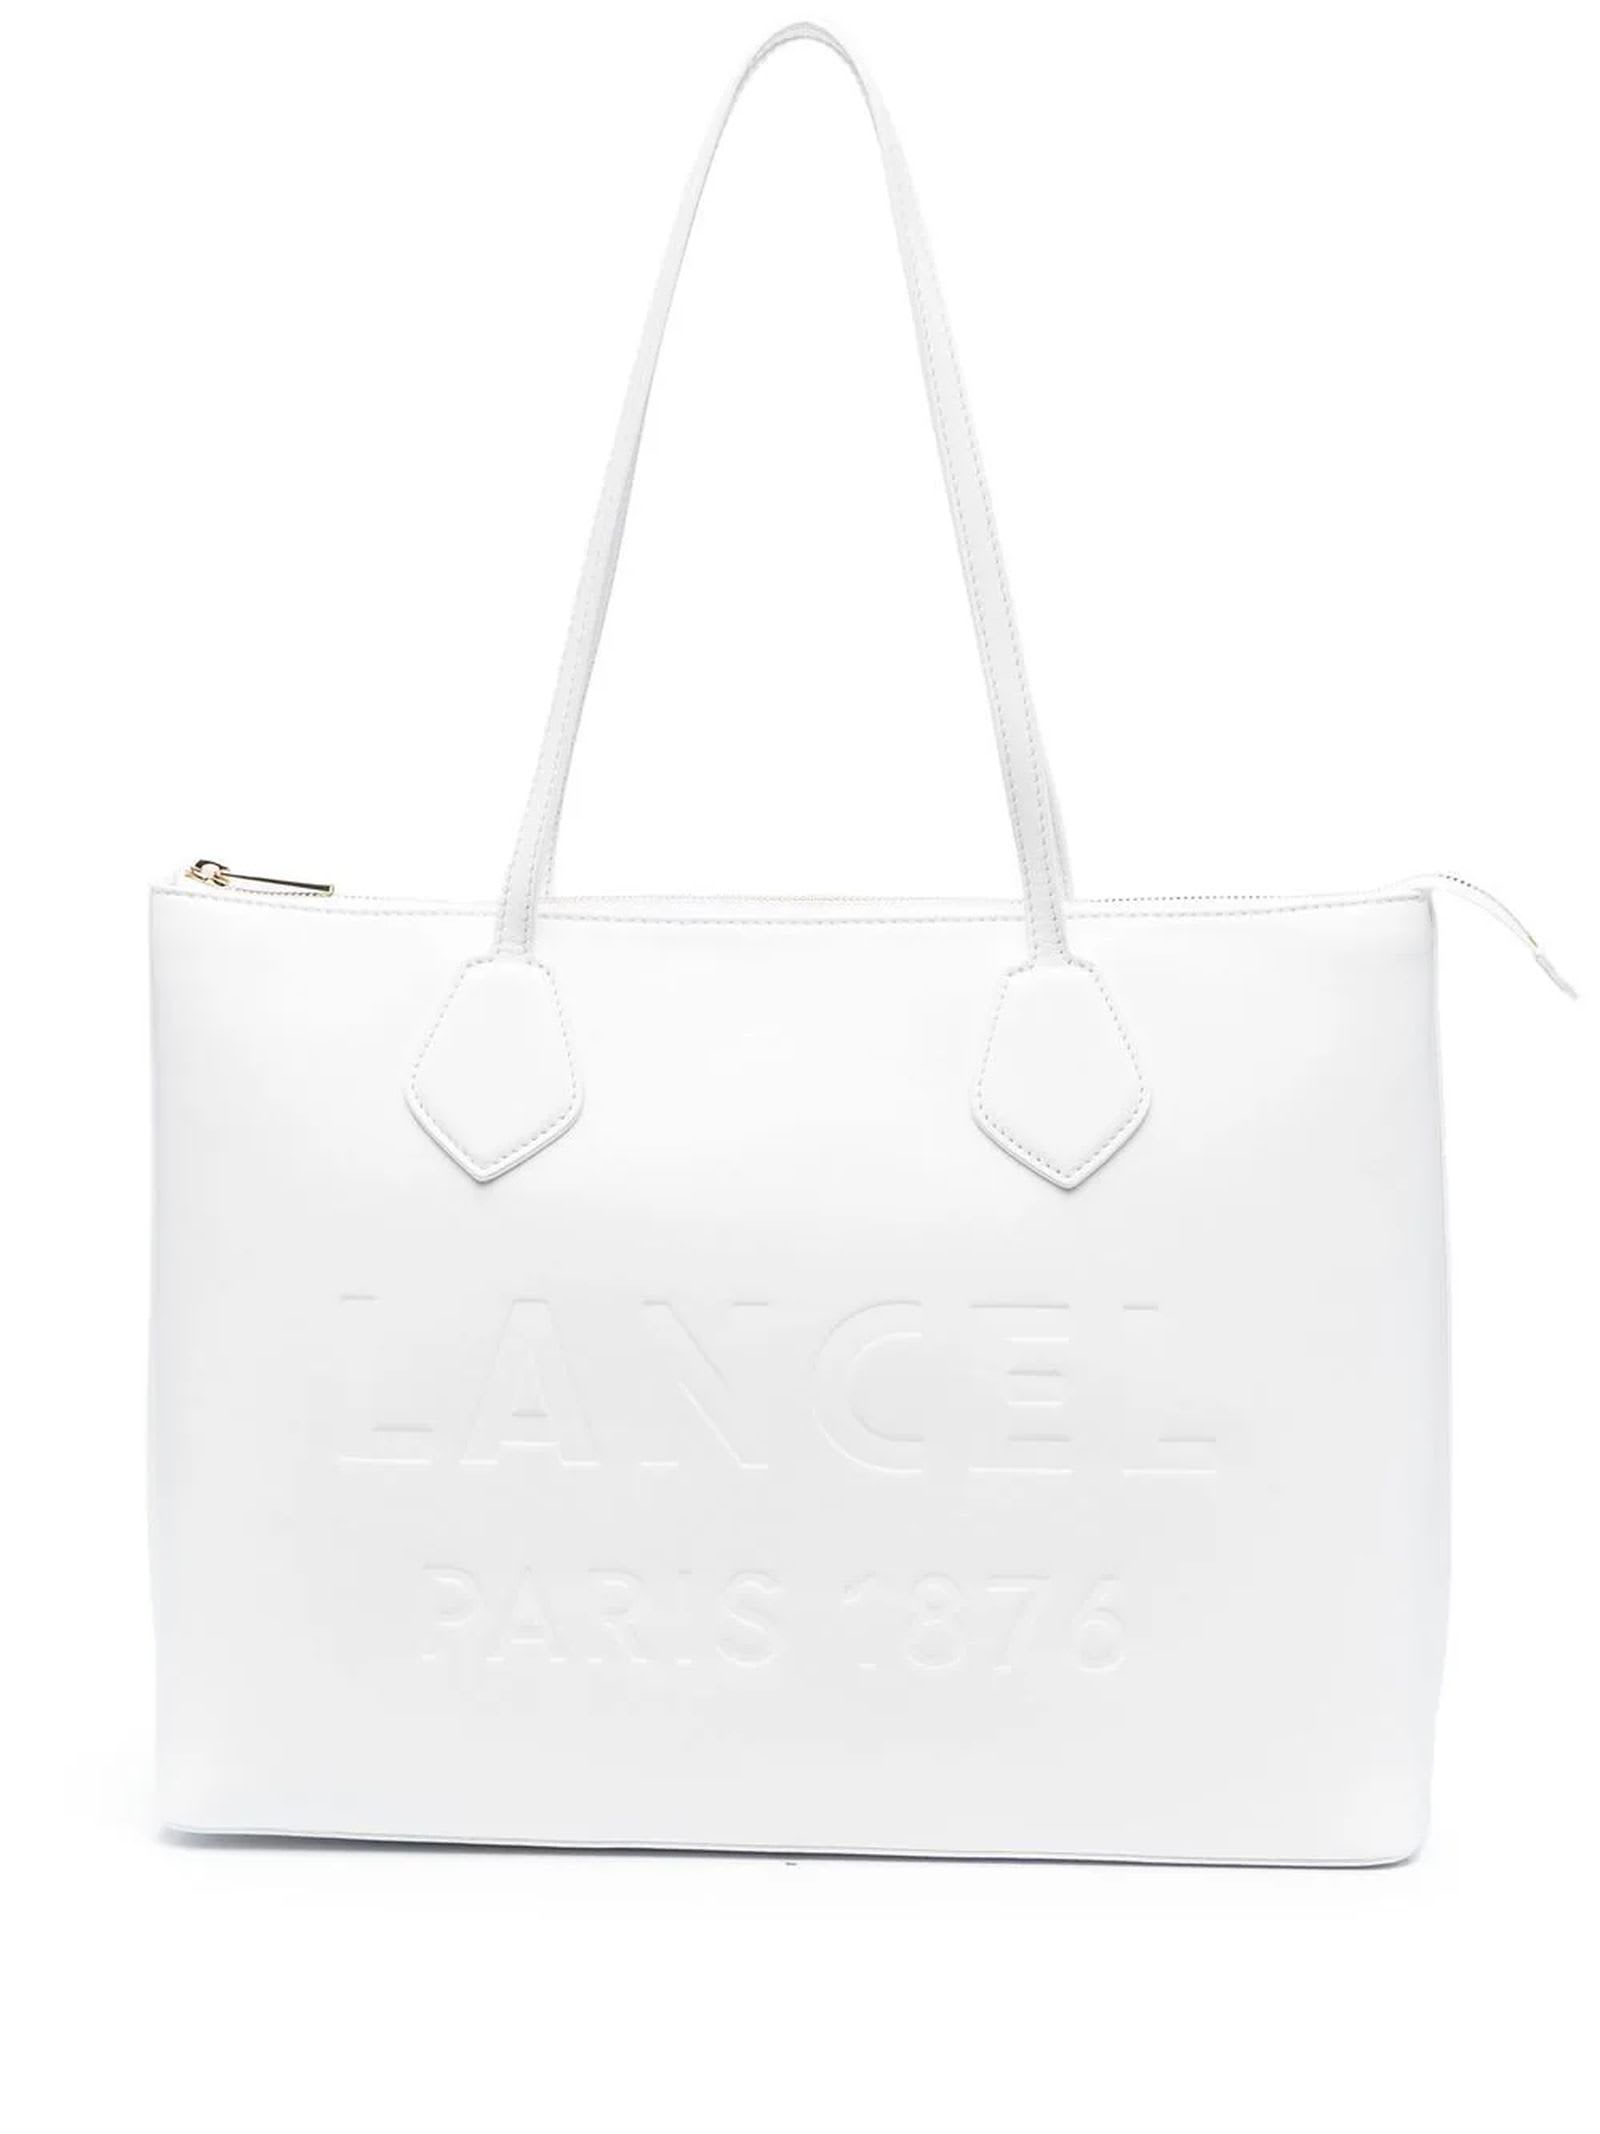 Lancel White Leather Tote Bag